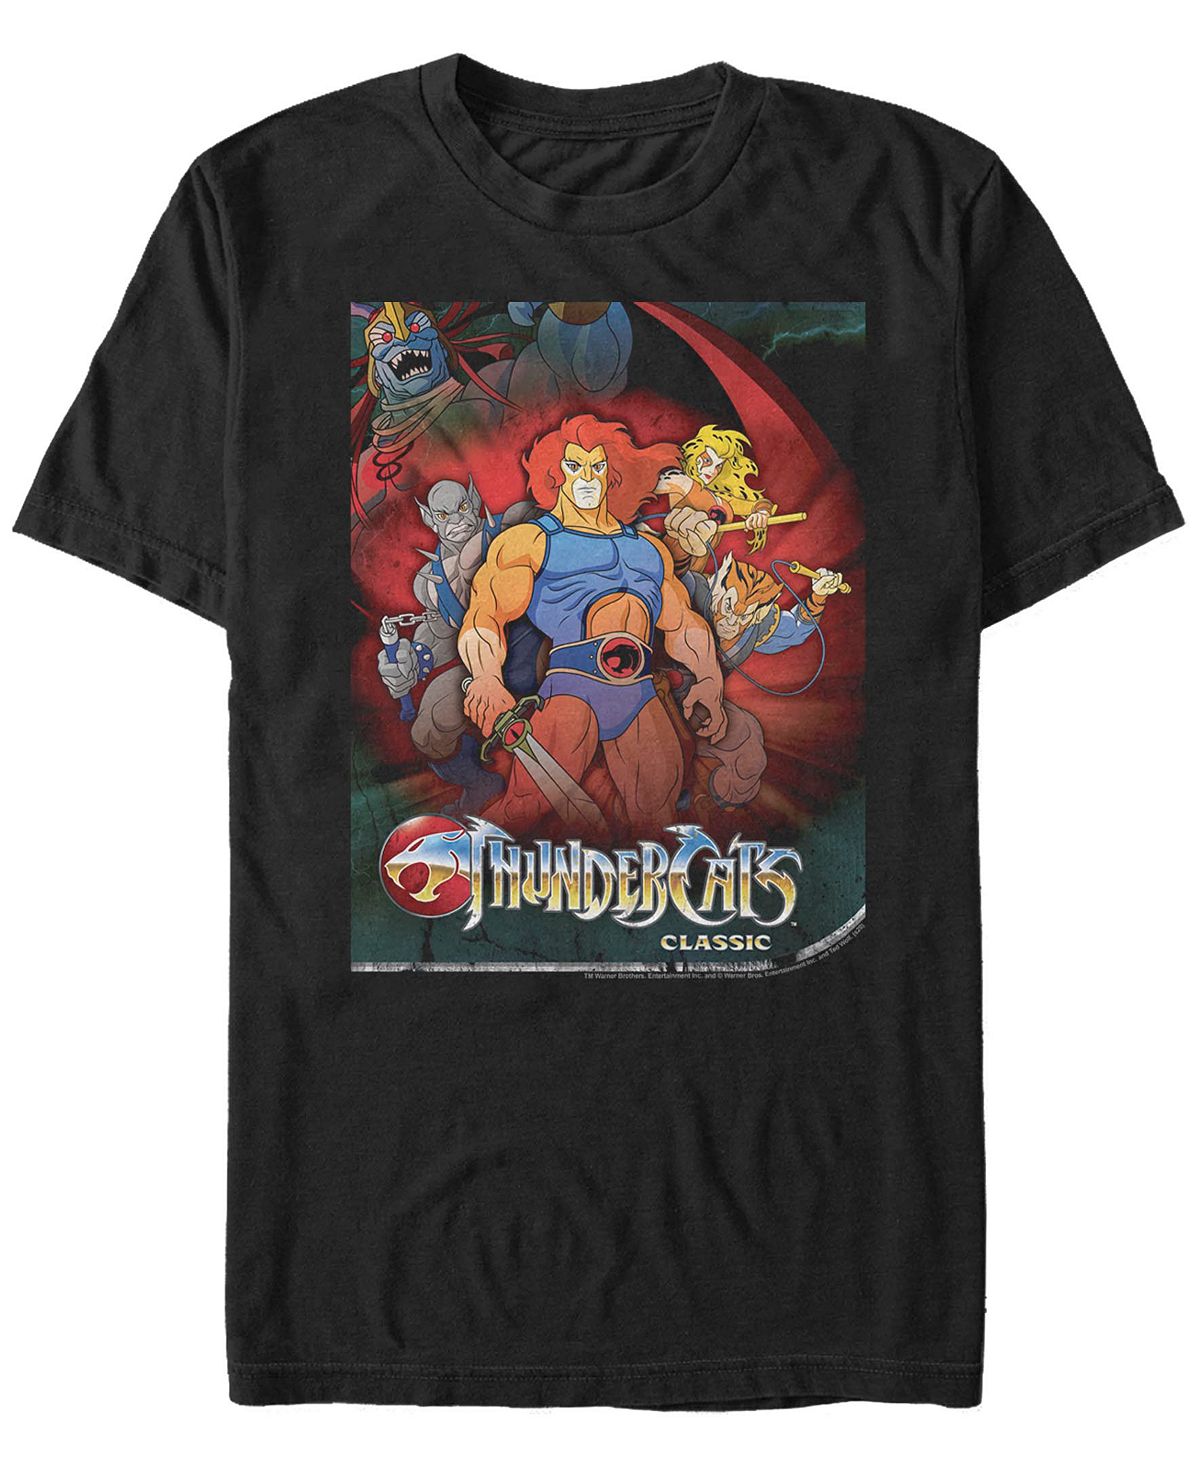 Мужская футболка с коротким рукавом с плакатом thundercats Fifth Sun, черный thundercat thundercat apocalypse 2 lp